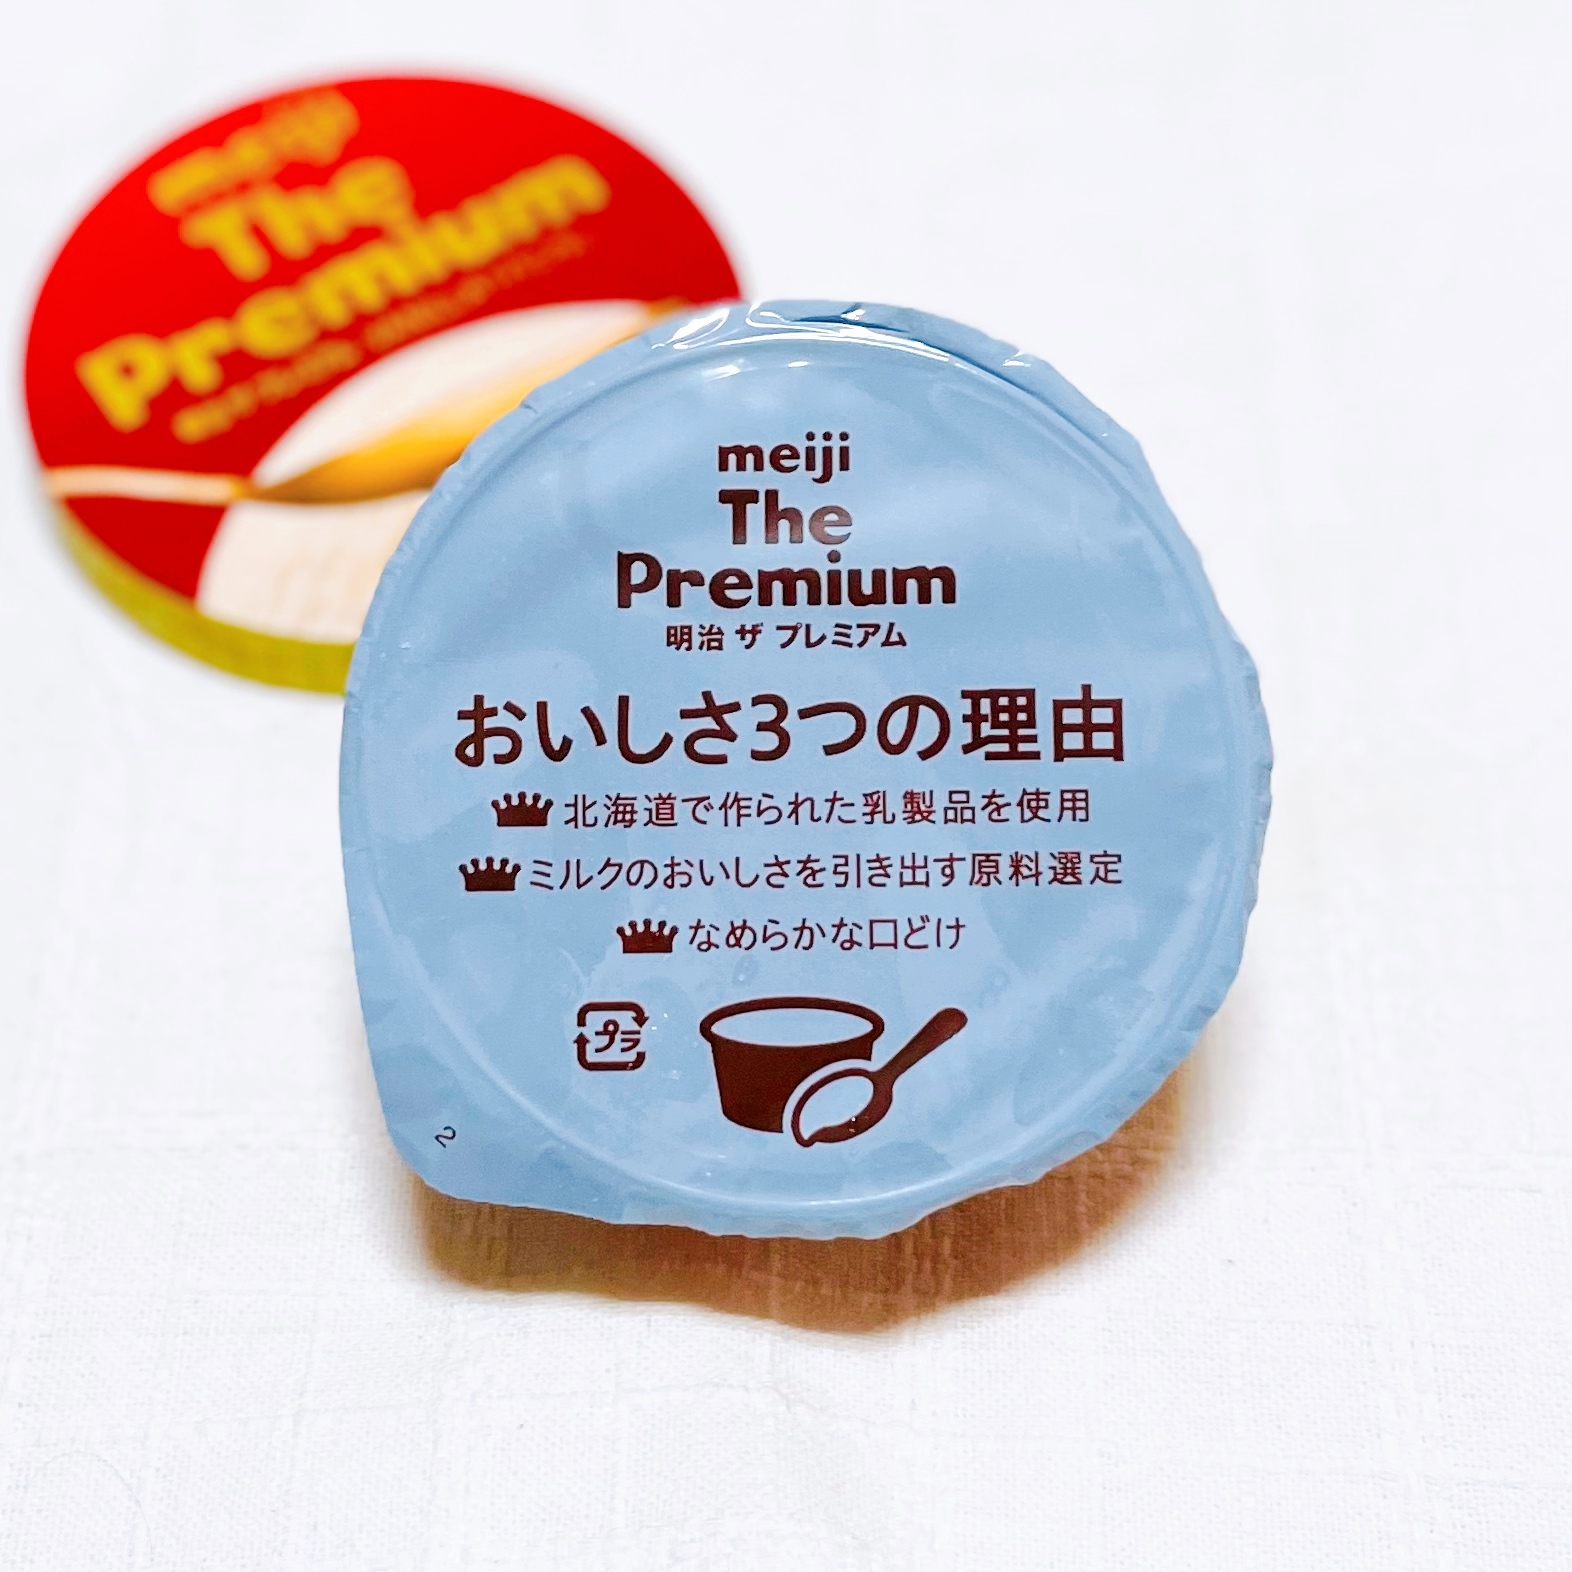 【The Premium バニラ】全国発売